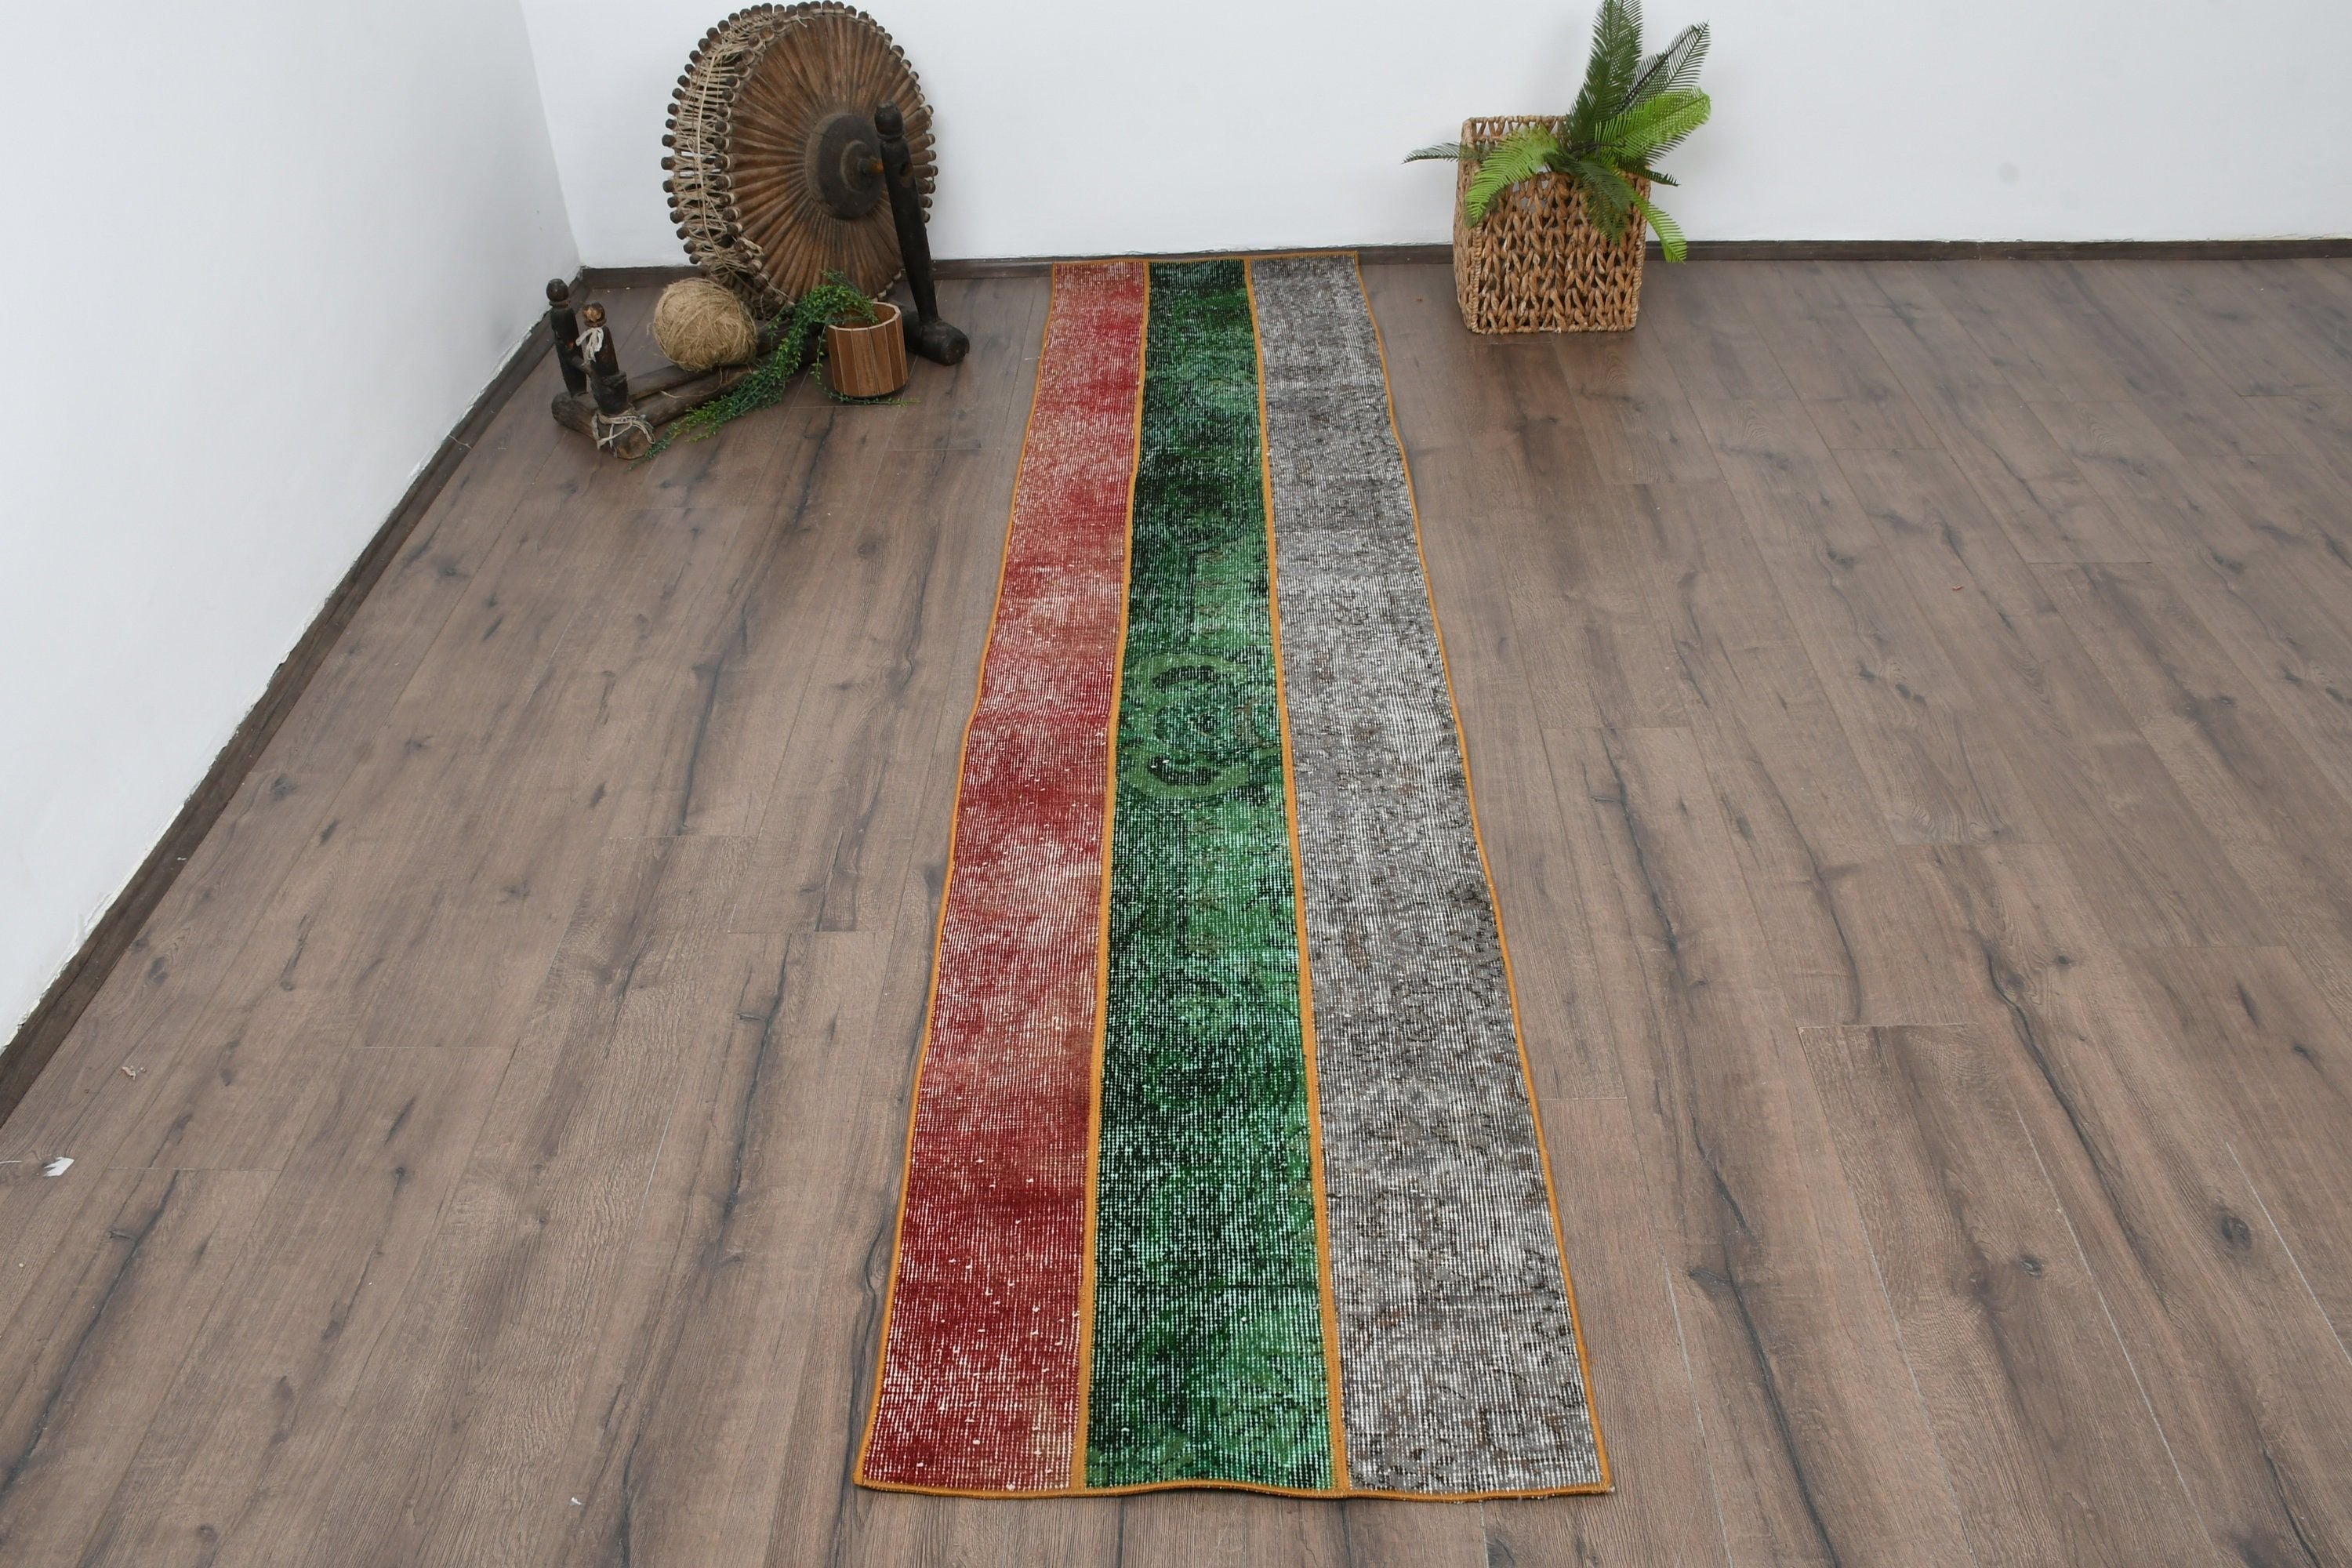 Vintage Rug, 2x8.7 ft Runner Rugs, Corridor Rugs, Green Bedroom Rugs, Anatolian Rug, Home Decor Rug, Turkish Rugs, Rugs for Corridor